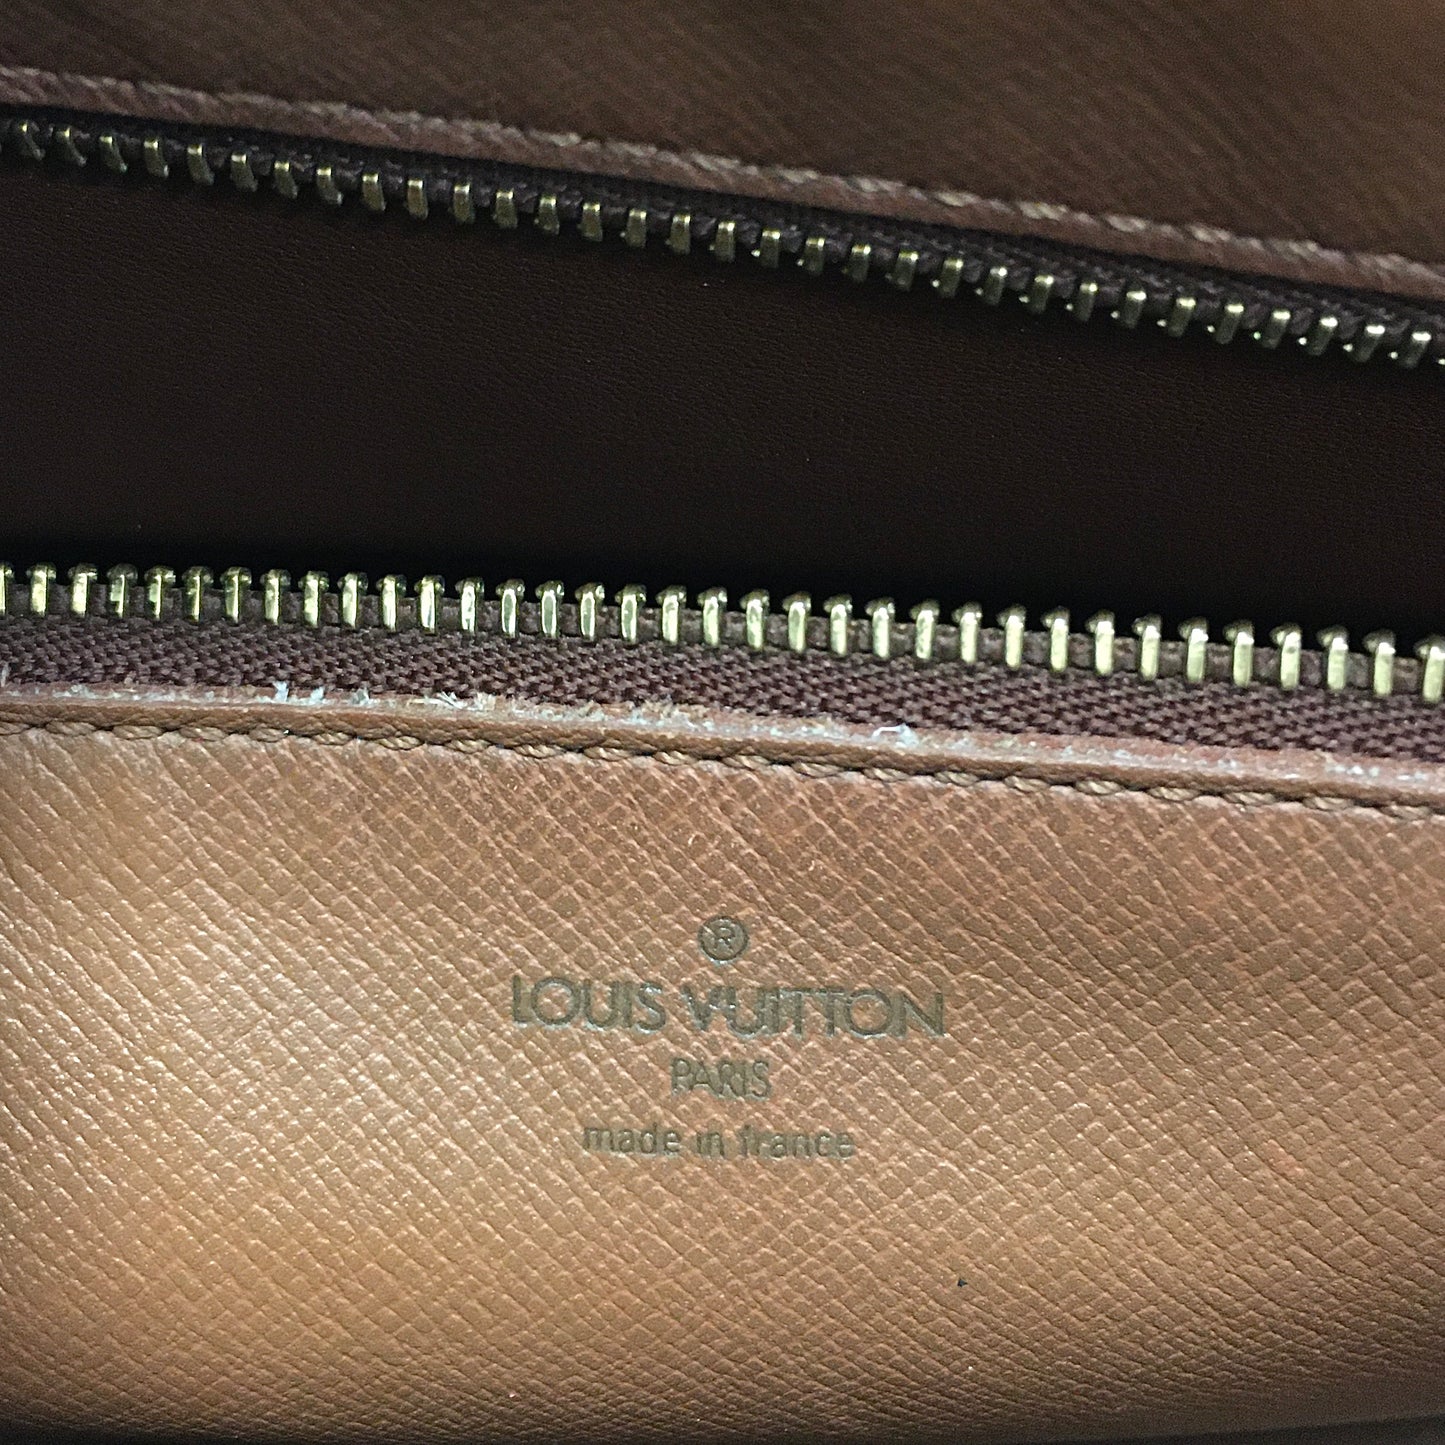 Louis Vuitton Monogram Trocadero (generic straps include) Sku# 67941